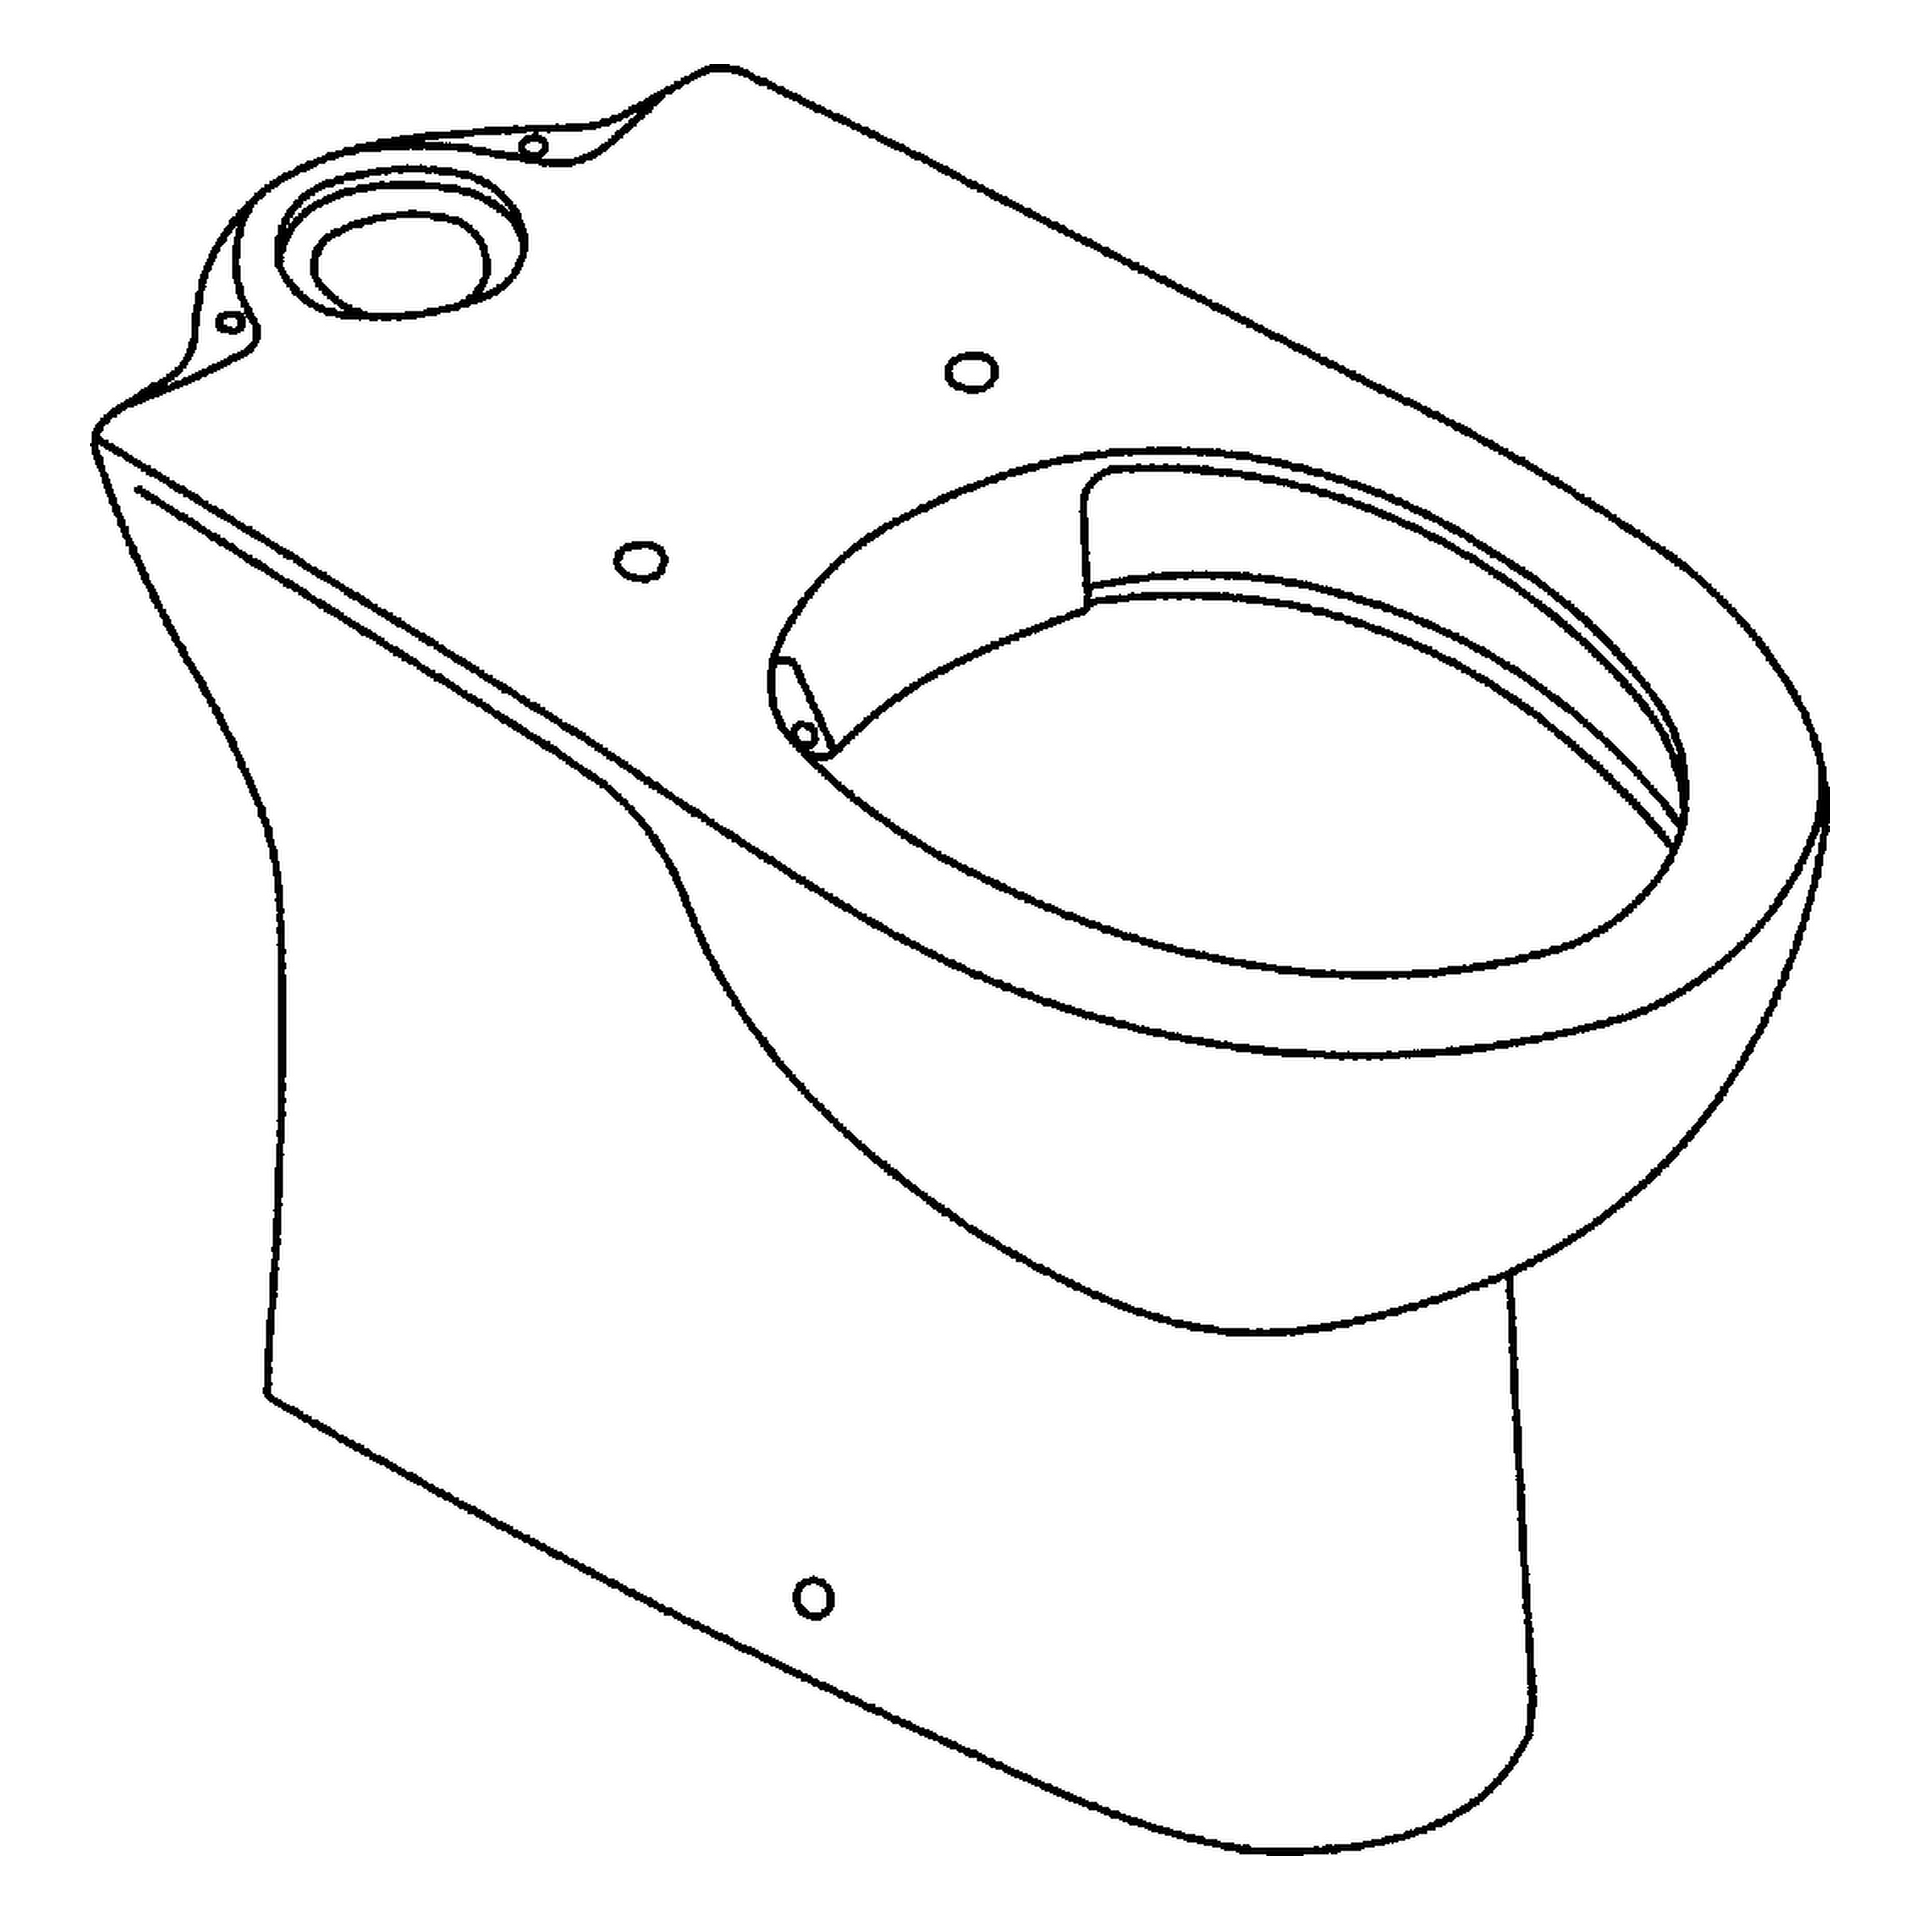 Stand-Tiefspül-WC Bau Keramik 39429, Abgang senkrecht, spülrandlos, ohne Spülkasten, aus Sanitärkeramik, alpinweiß